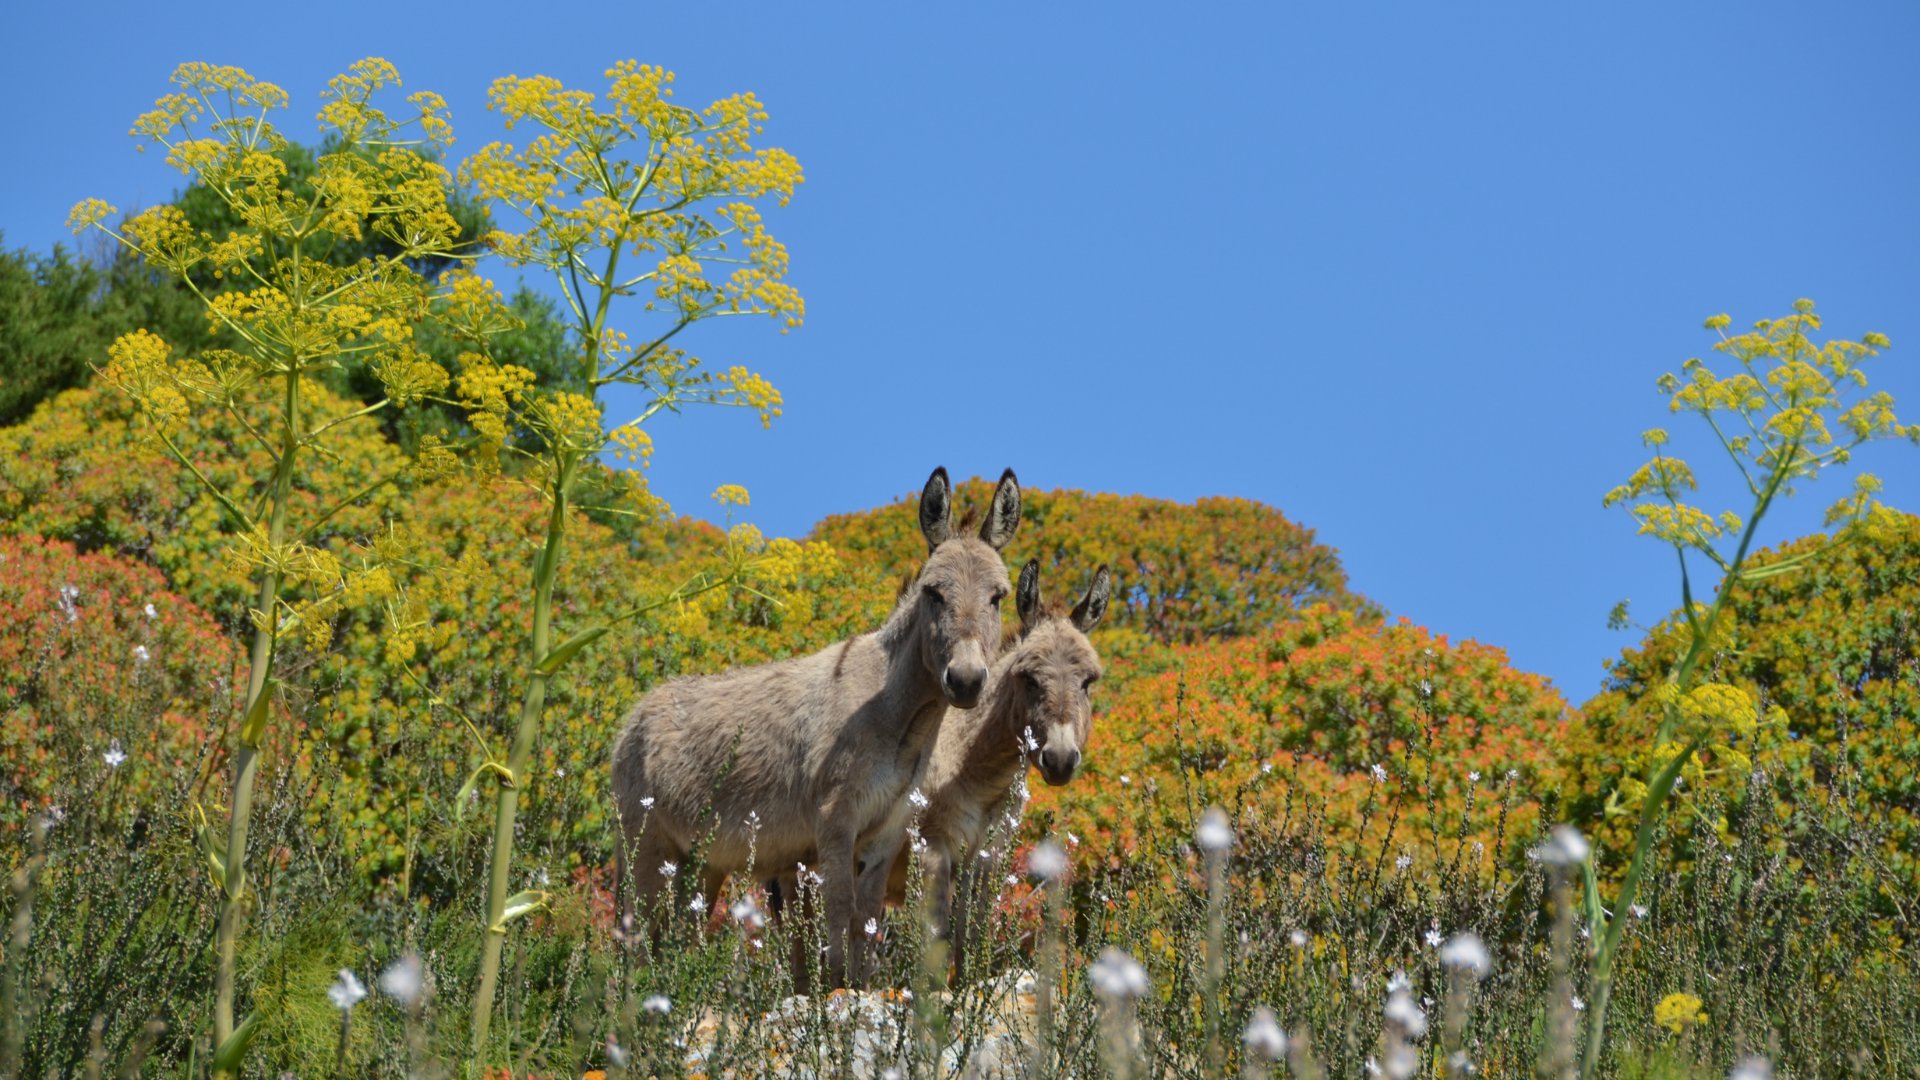 <p>Donkeys on the island of Asinara</p><p><br></p>